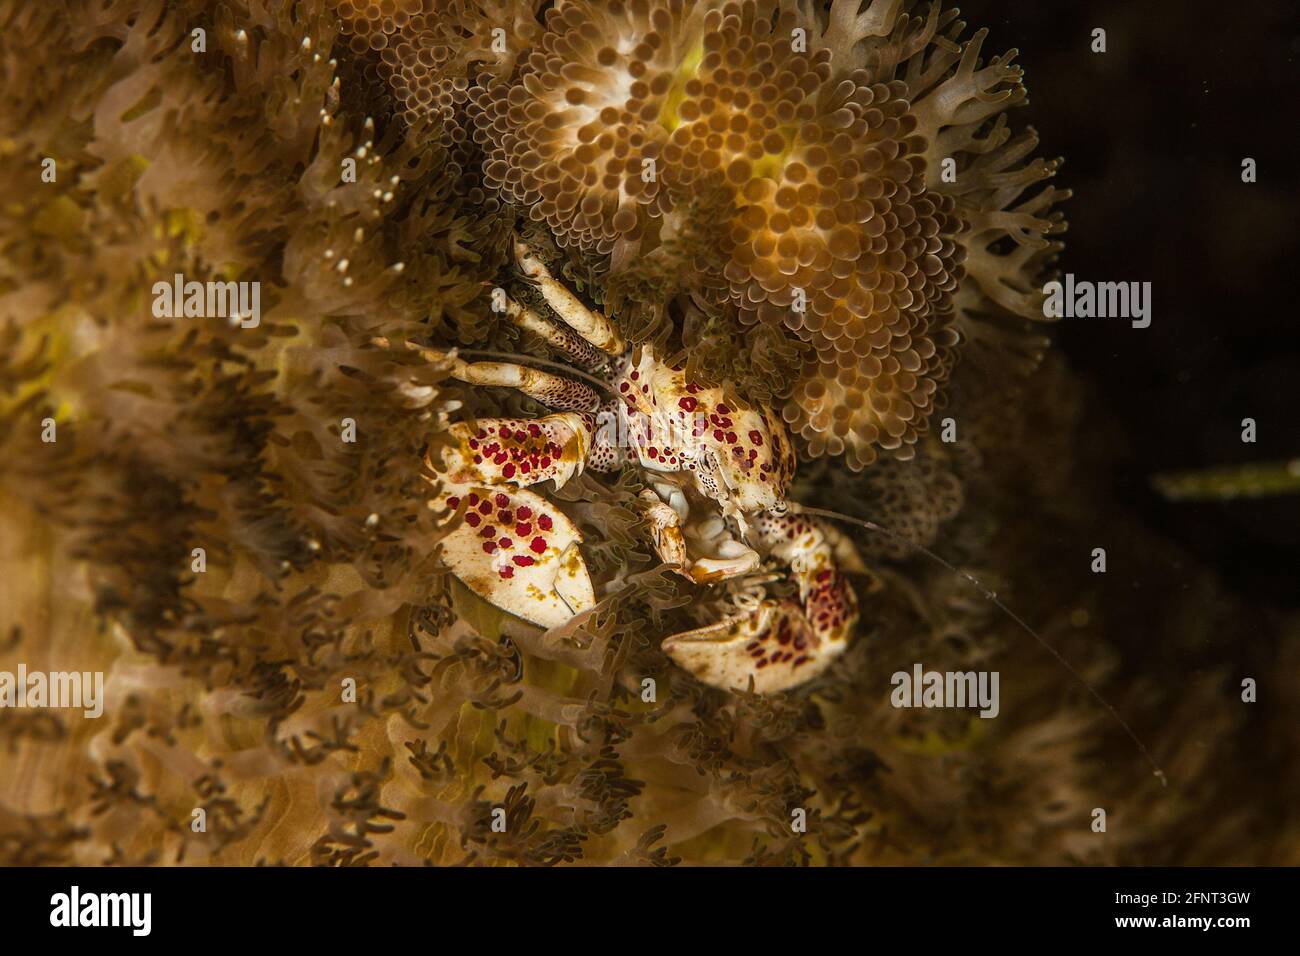 Porcelain Crab within a host anemone, Cebu, Philippines Stock Photo